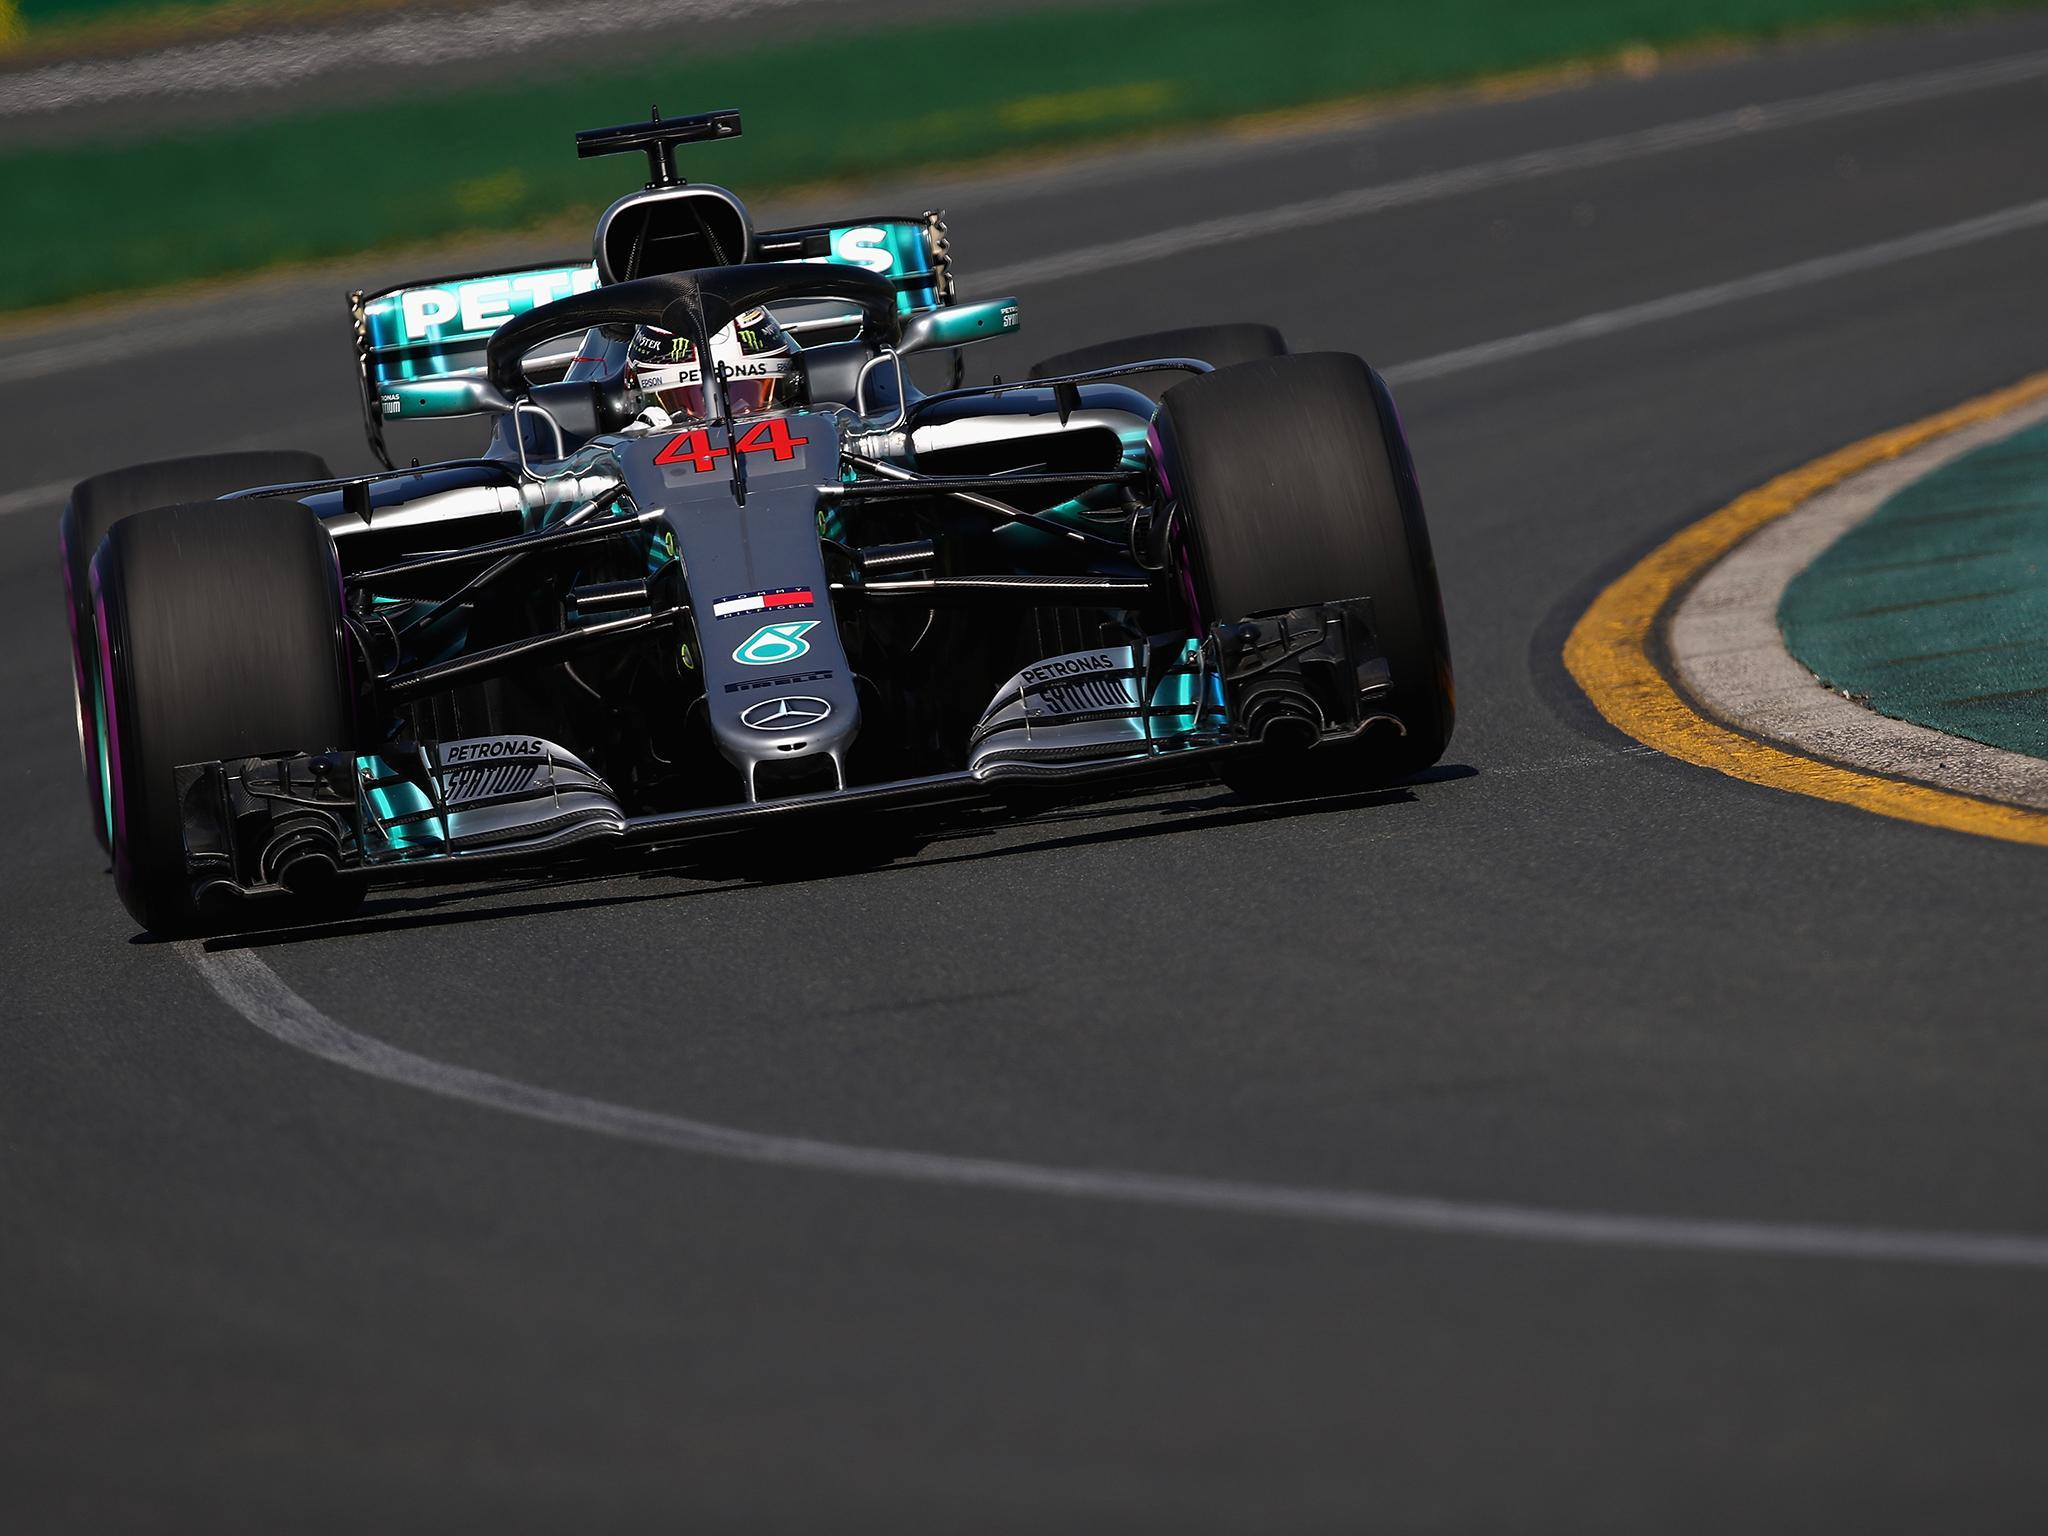 Australian Grand Prix 2018: Lewis Hamilton on top but Max Verstappen